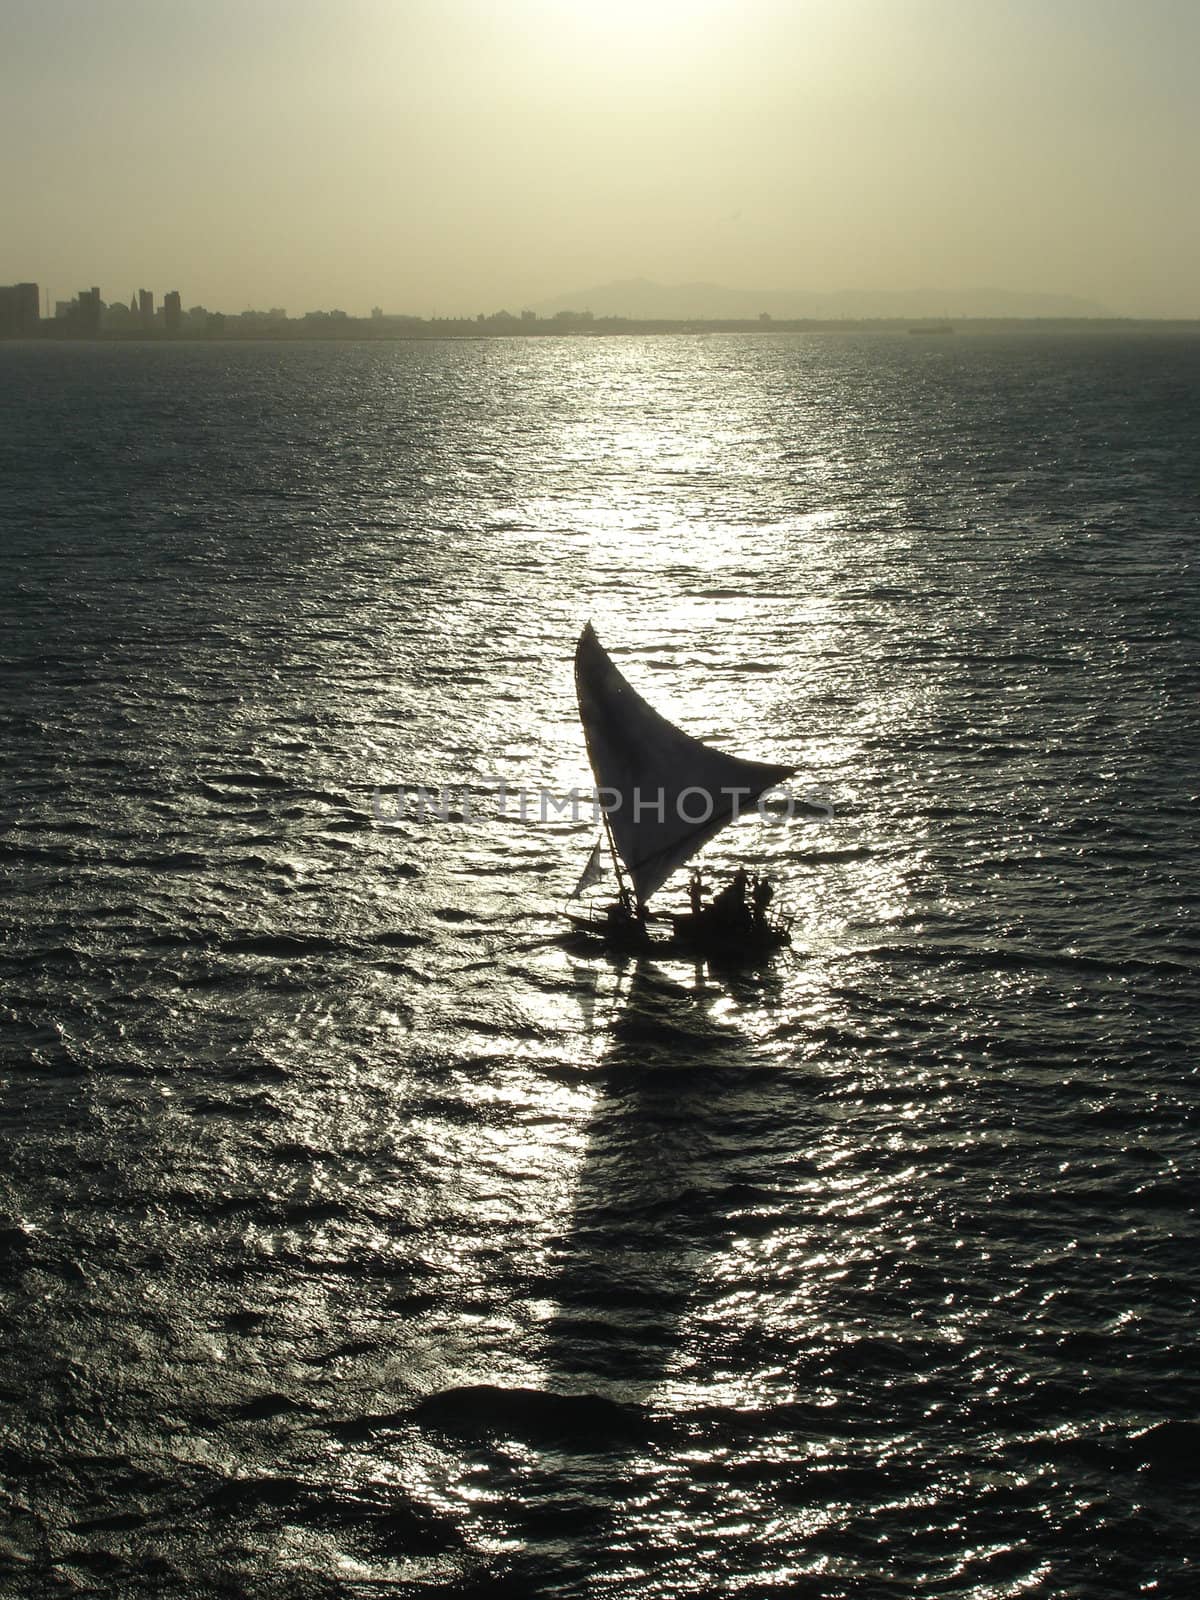 A sail boat silhouette.